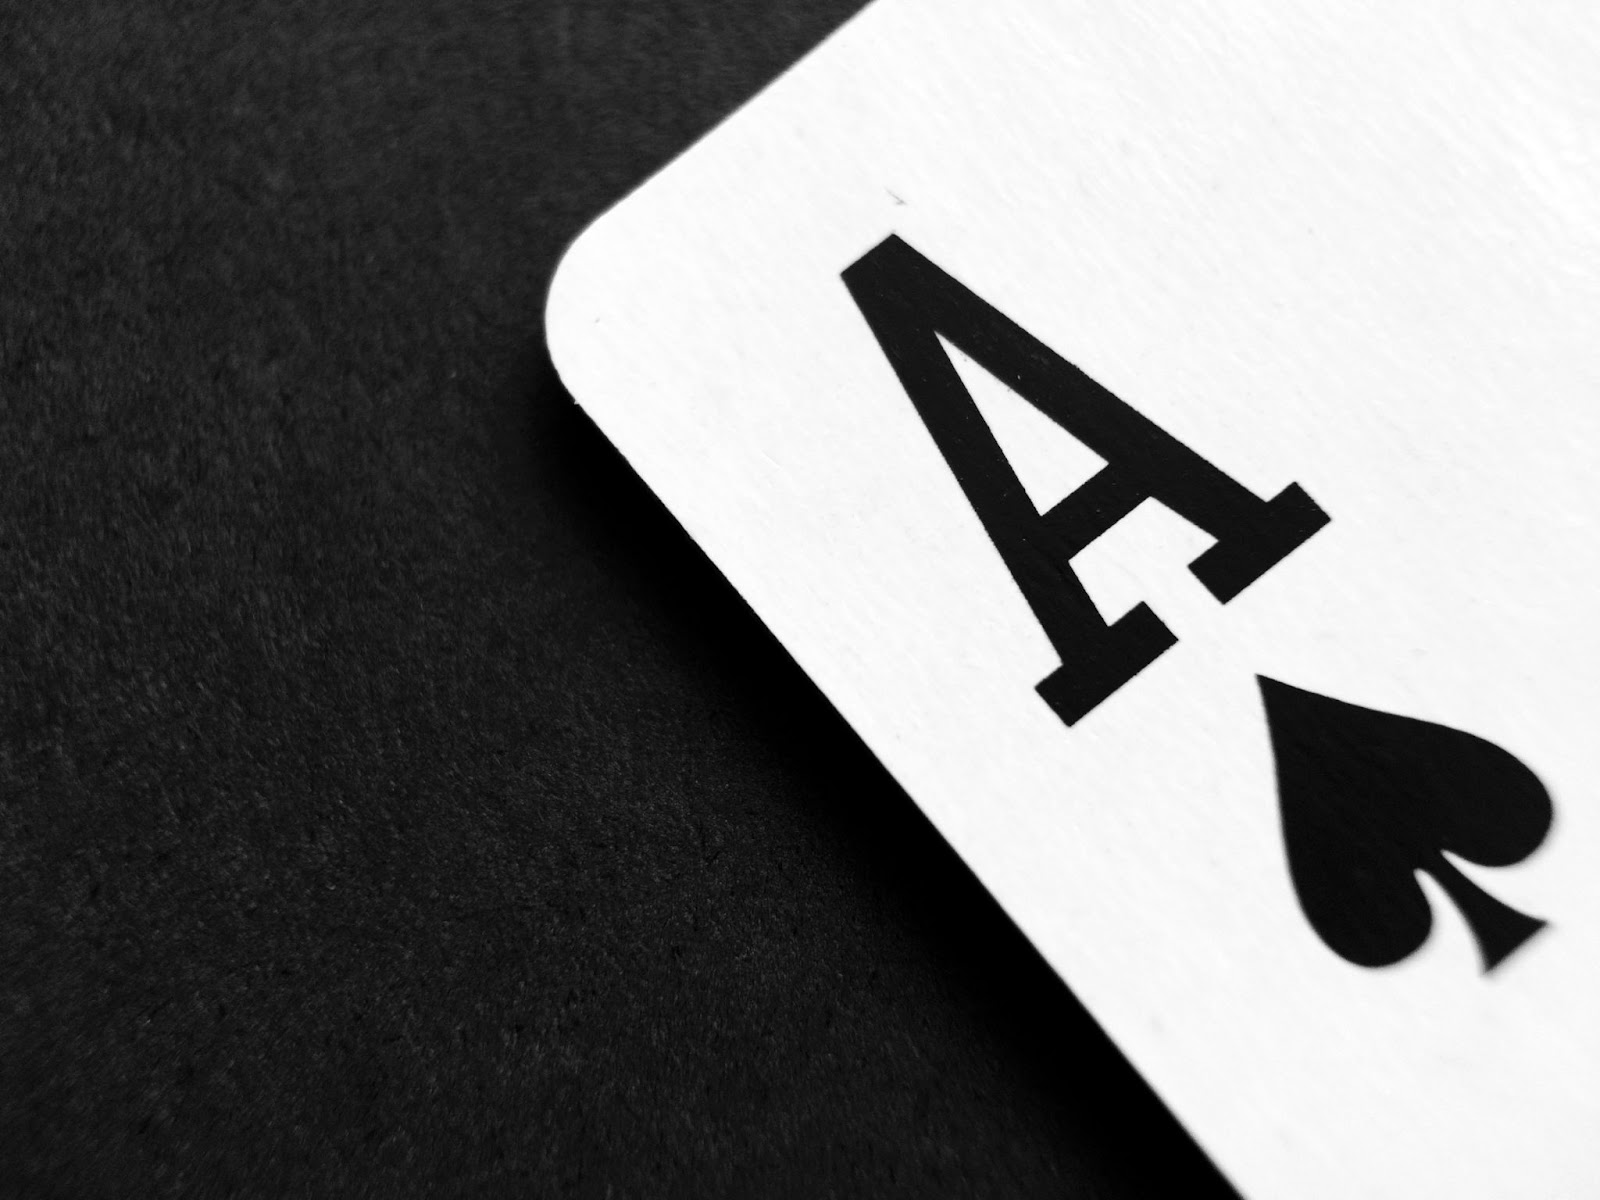 Gambling Aesthetic - How Online Casino Digital Marketing Works